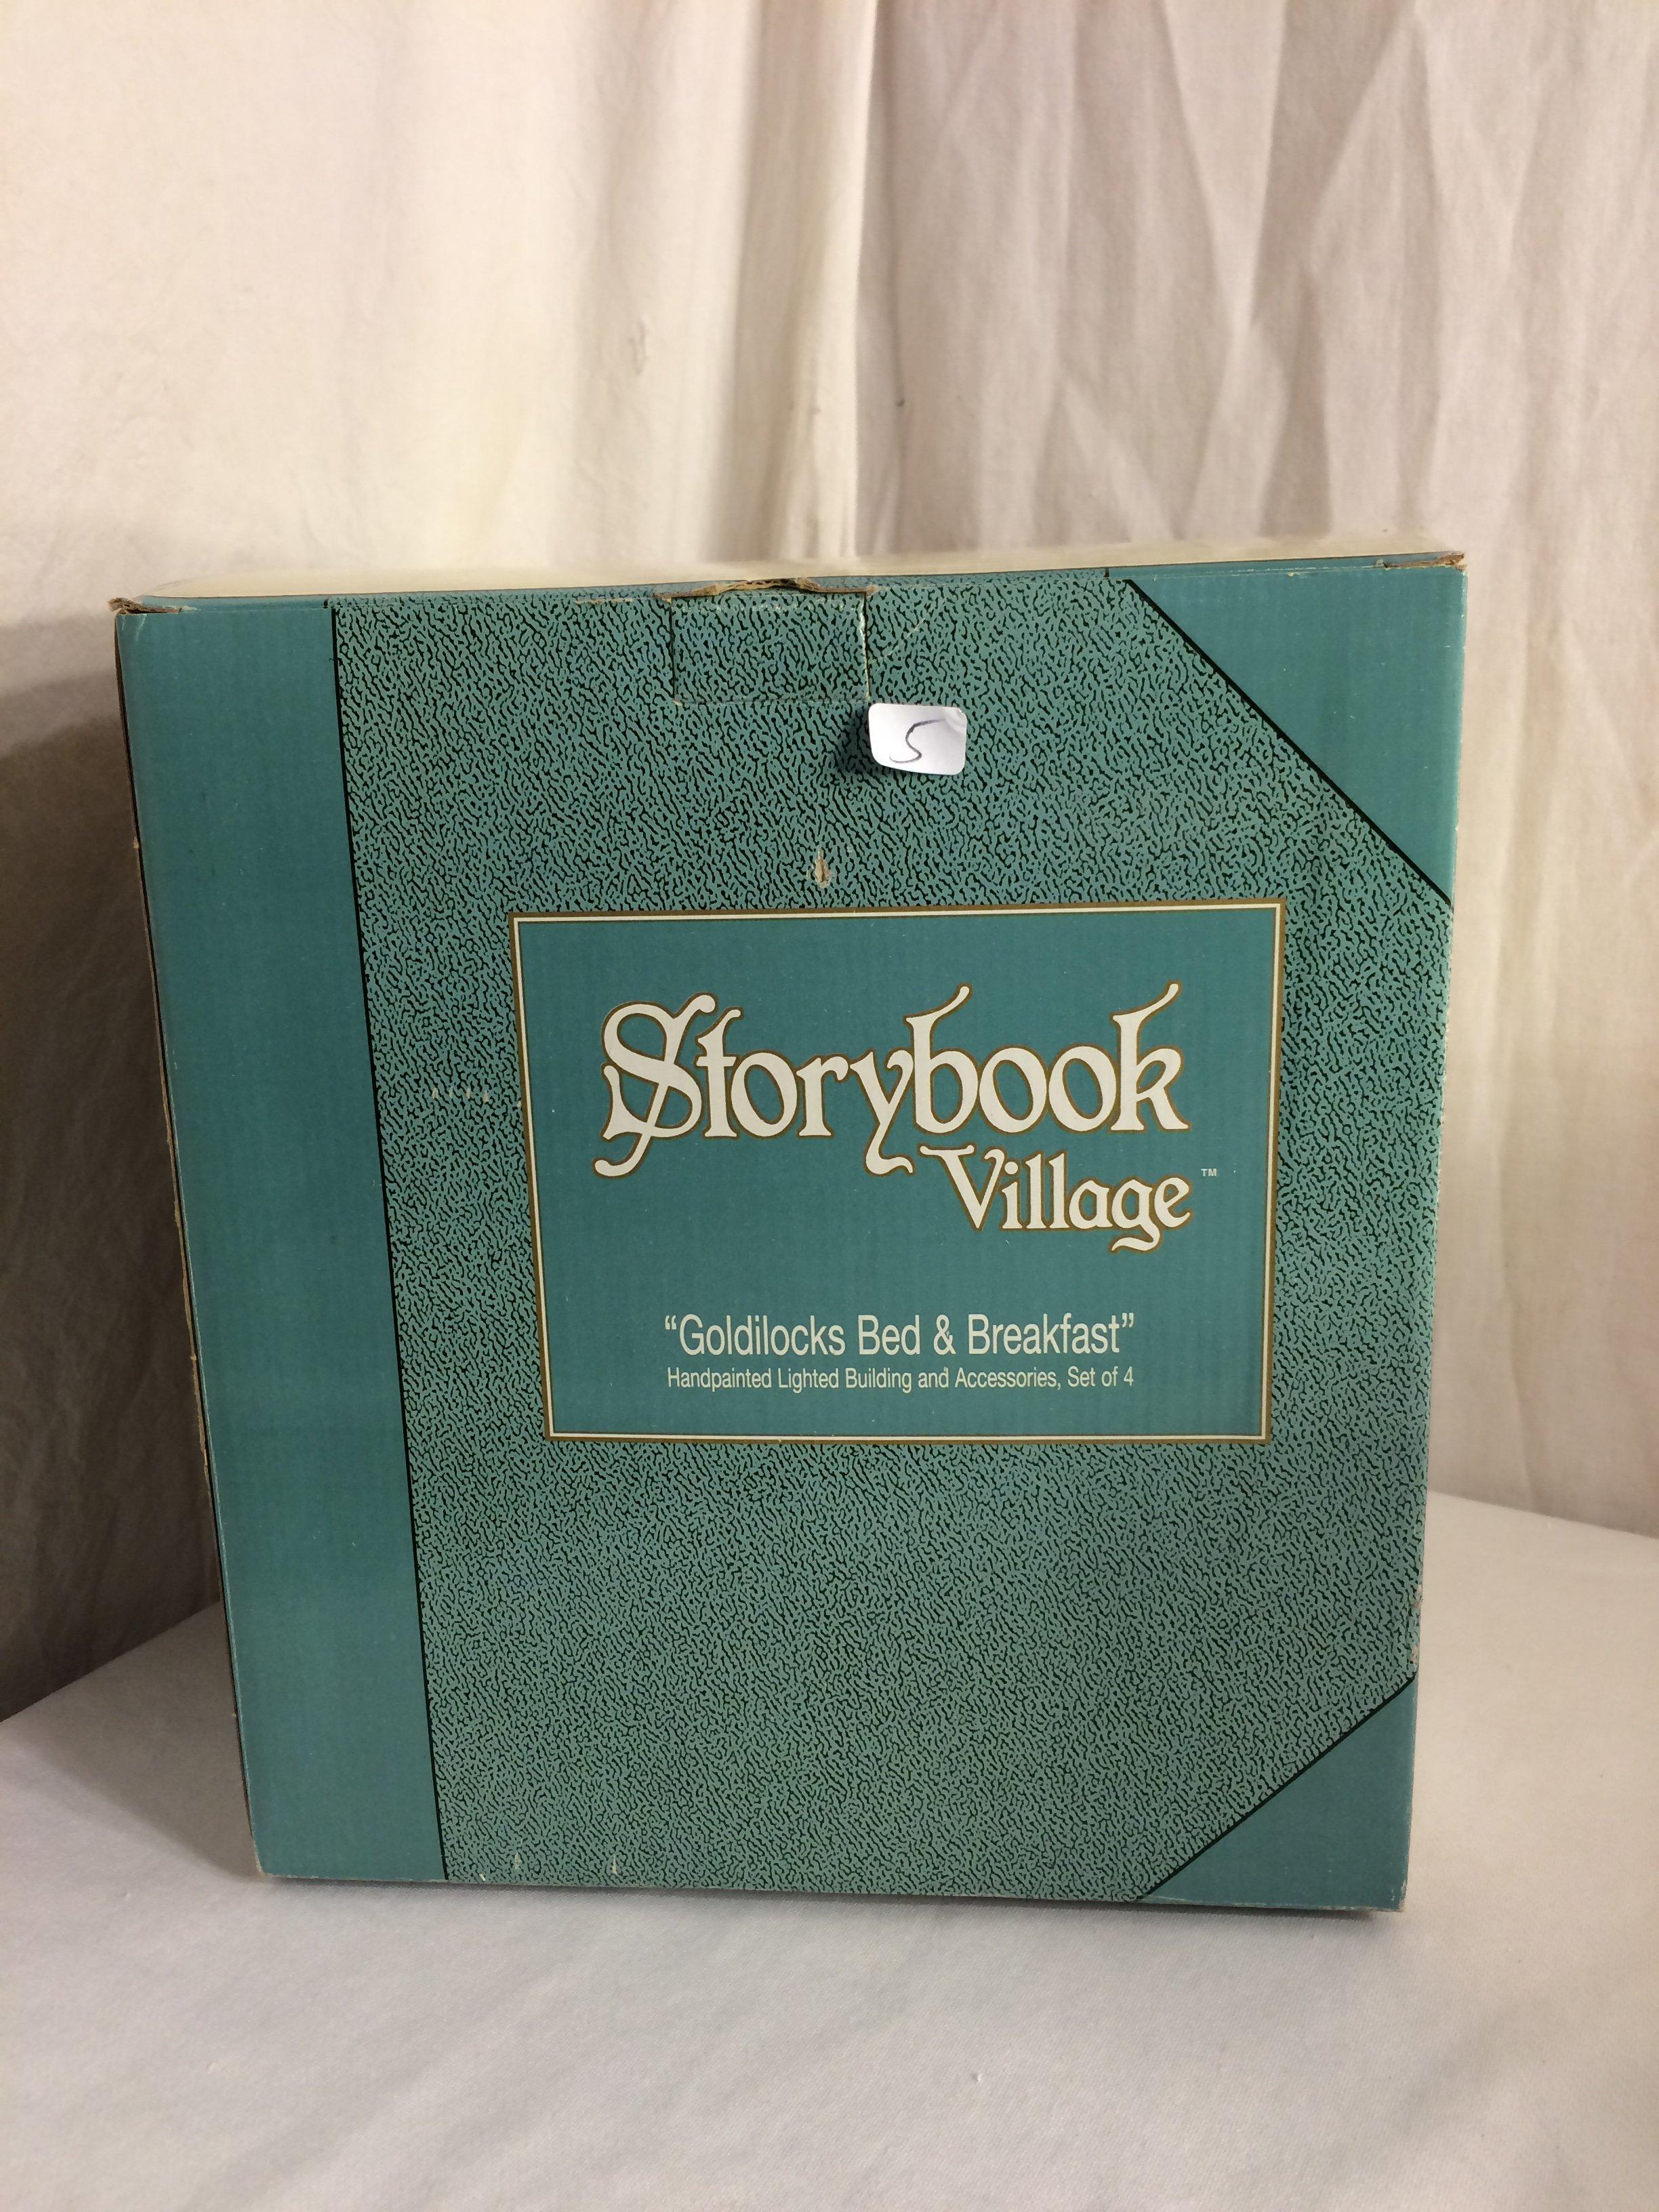 Collector Storybook Village Fairy Tales "Goldilocks Bed & Breakfast" Handpainted Lighted Building se